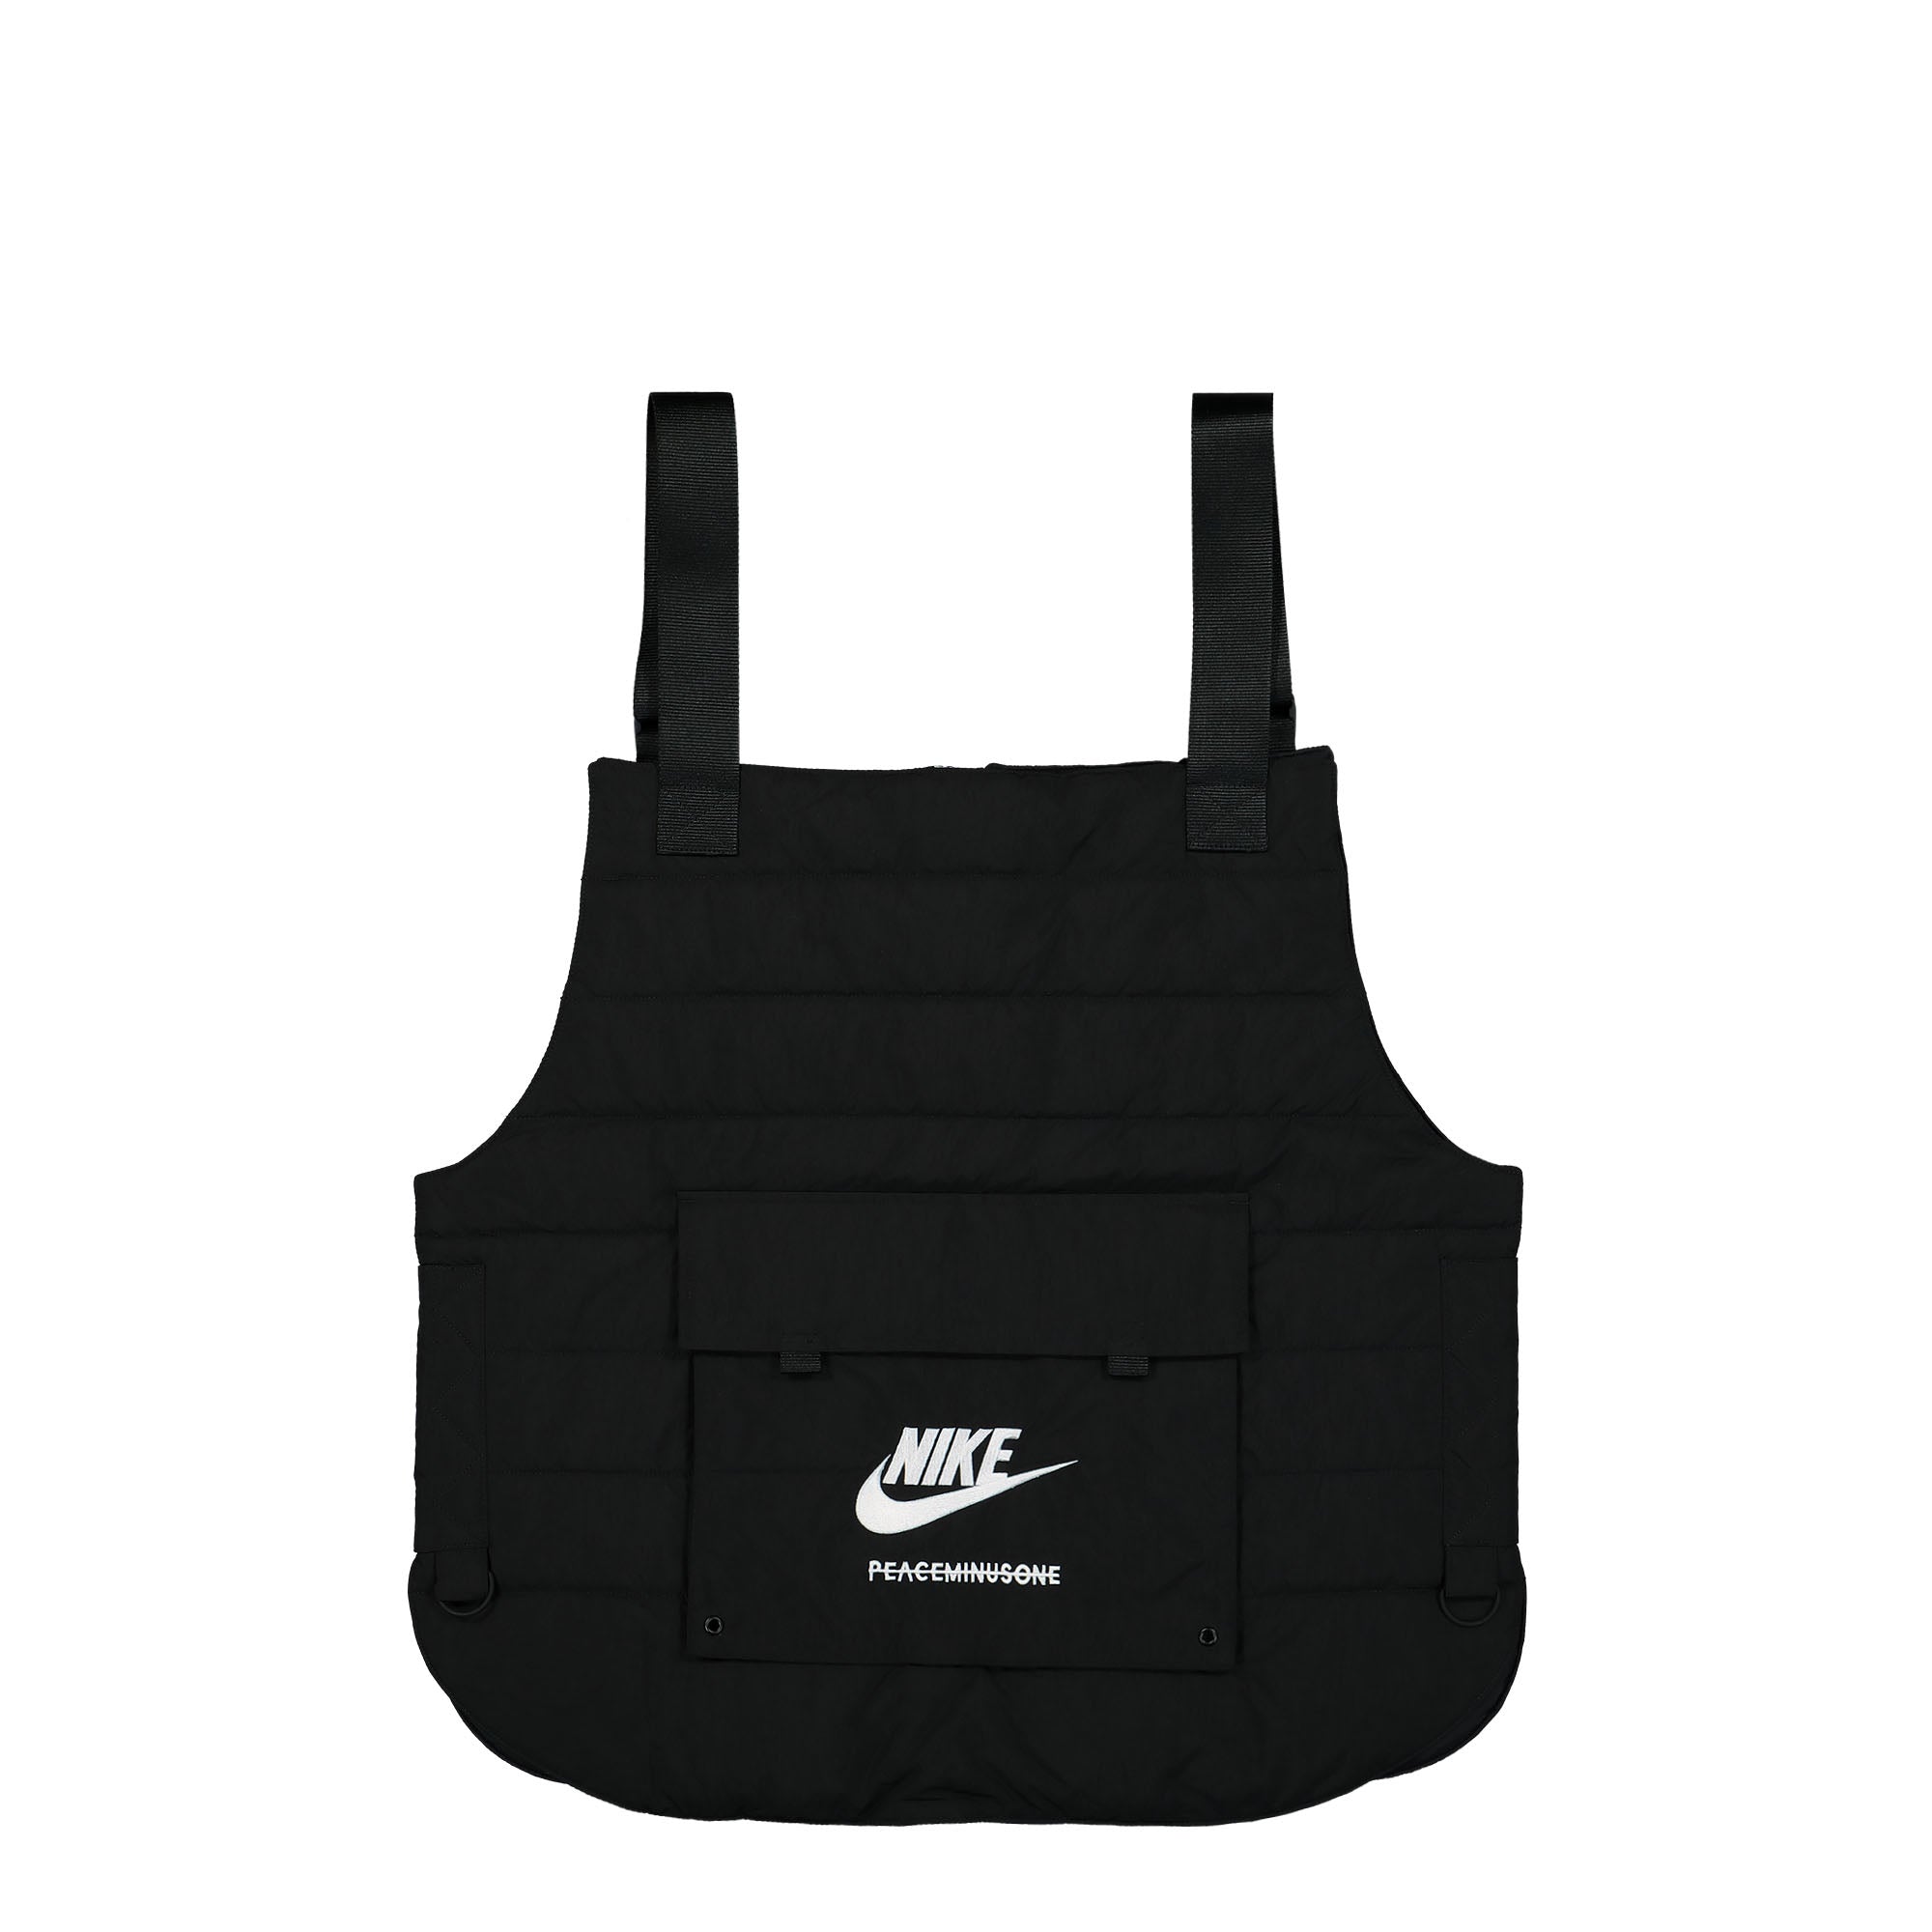 Concepts Dubai | Nike Nike x G-Dragon 2-1 Jacket (Black)